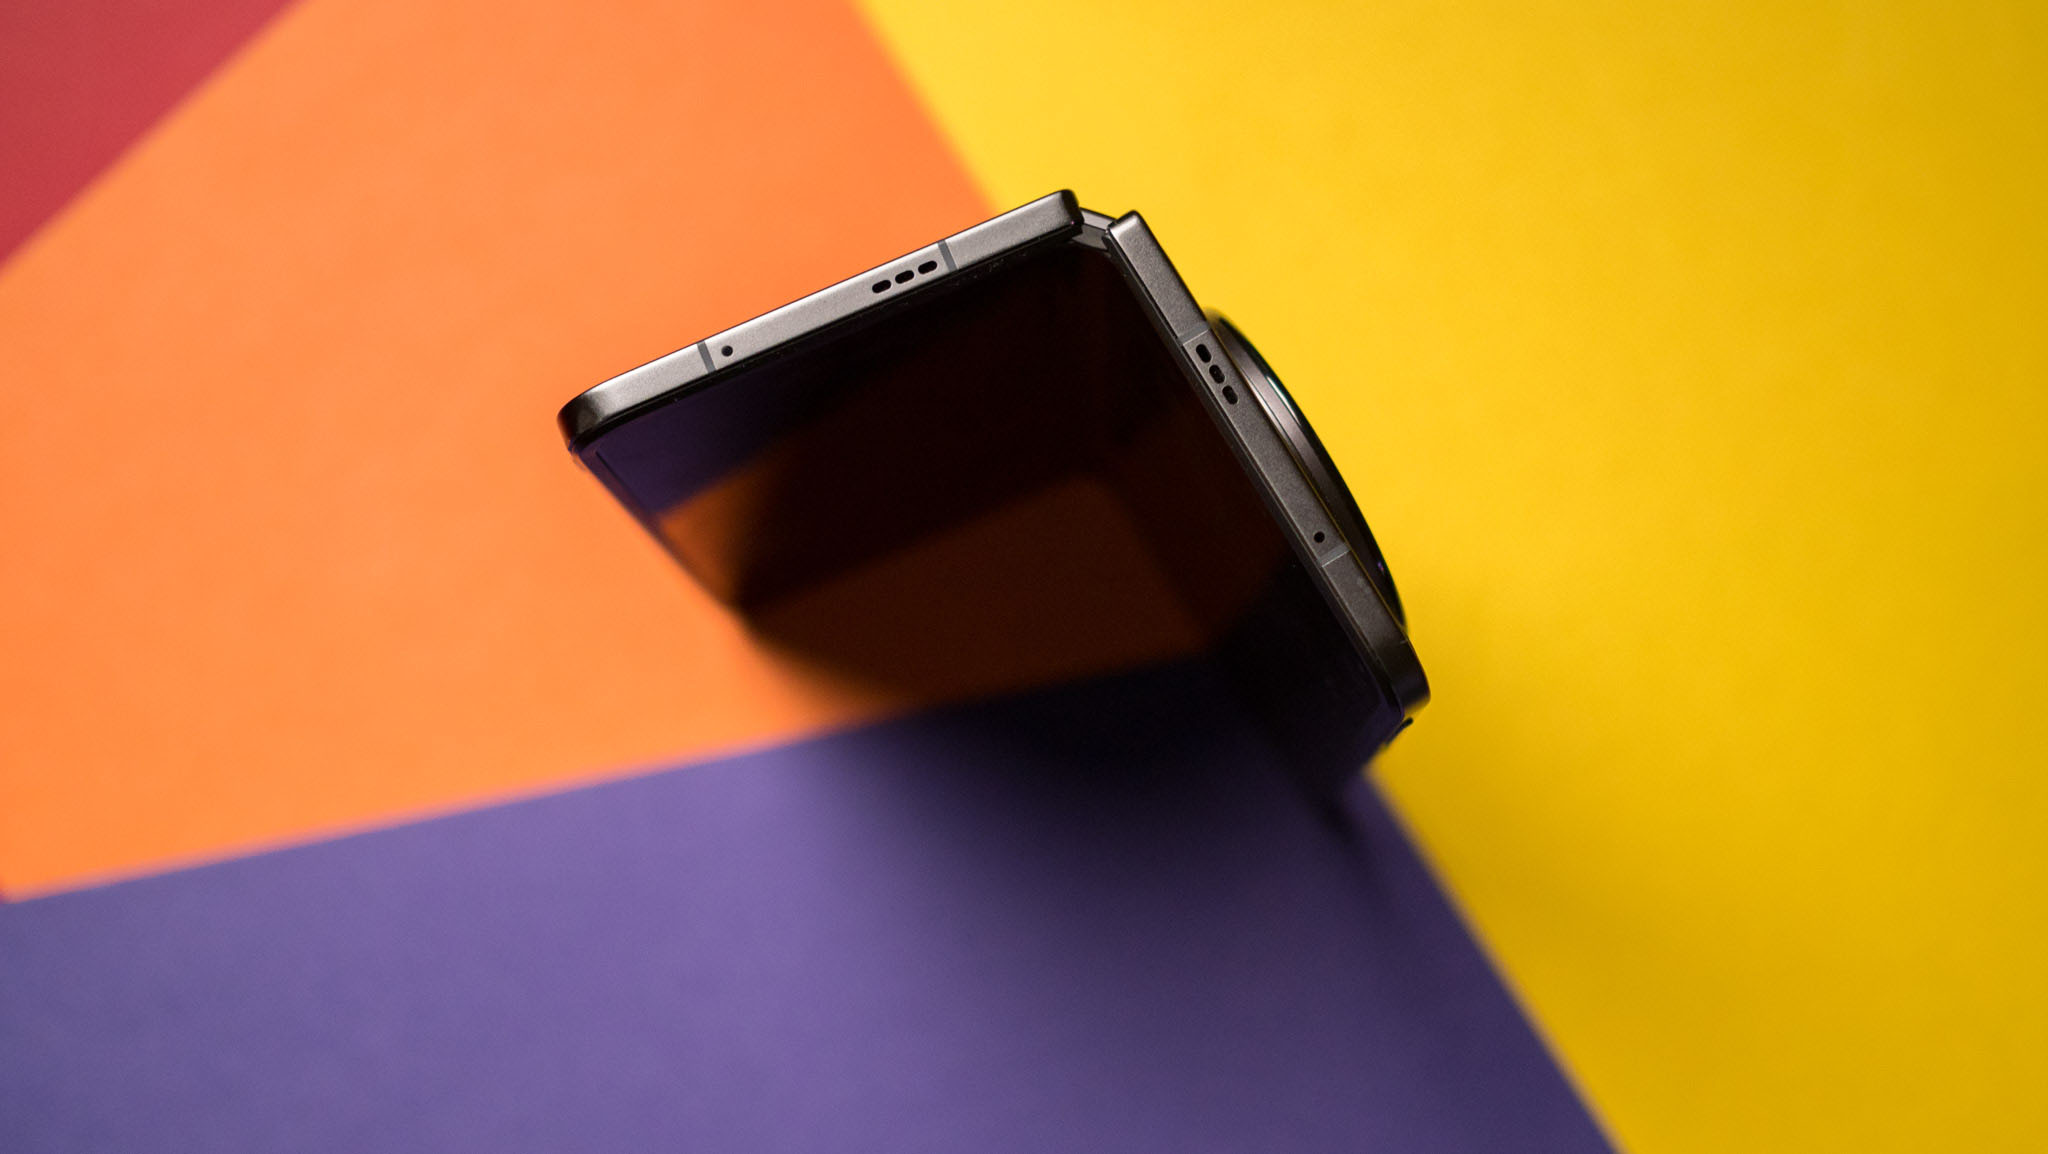 OnePlus foldable